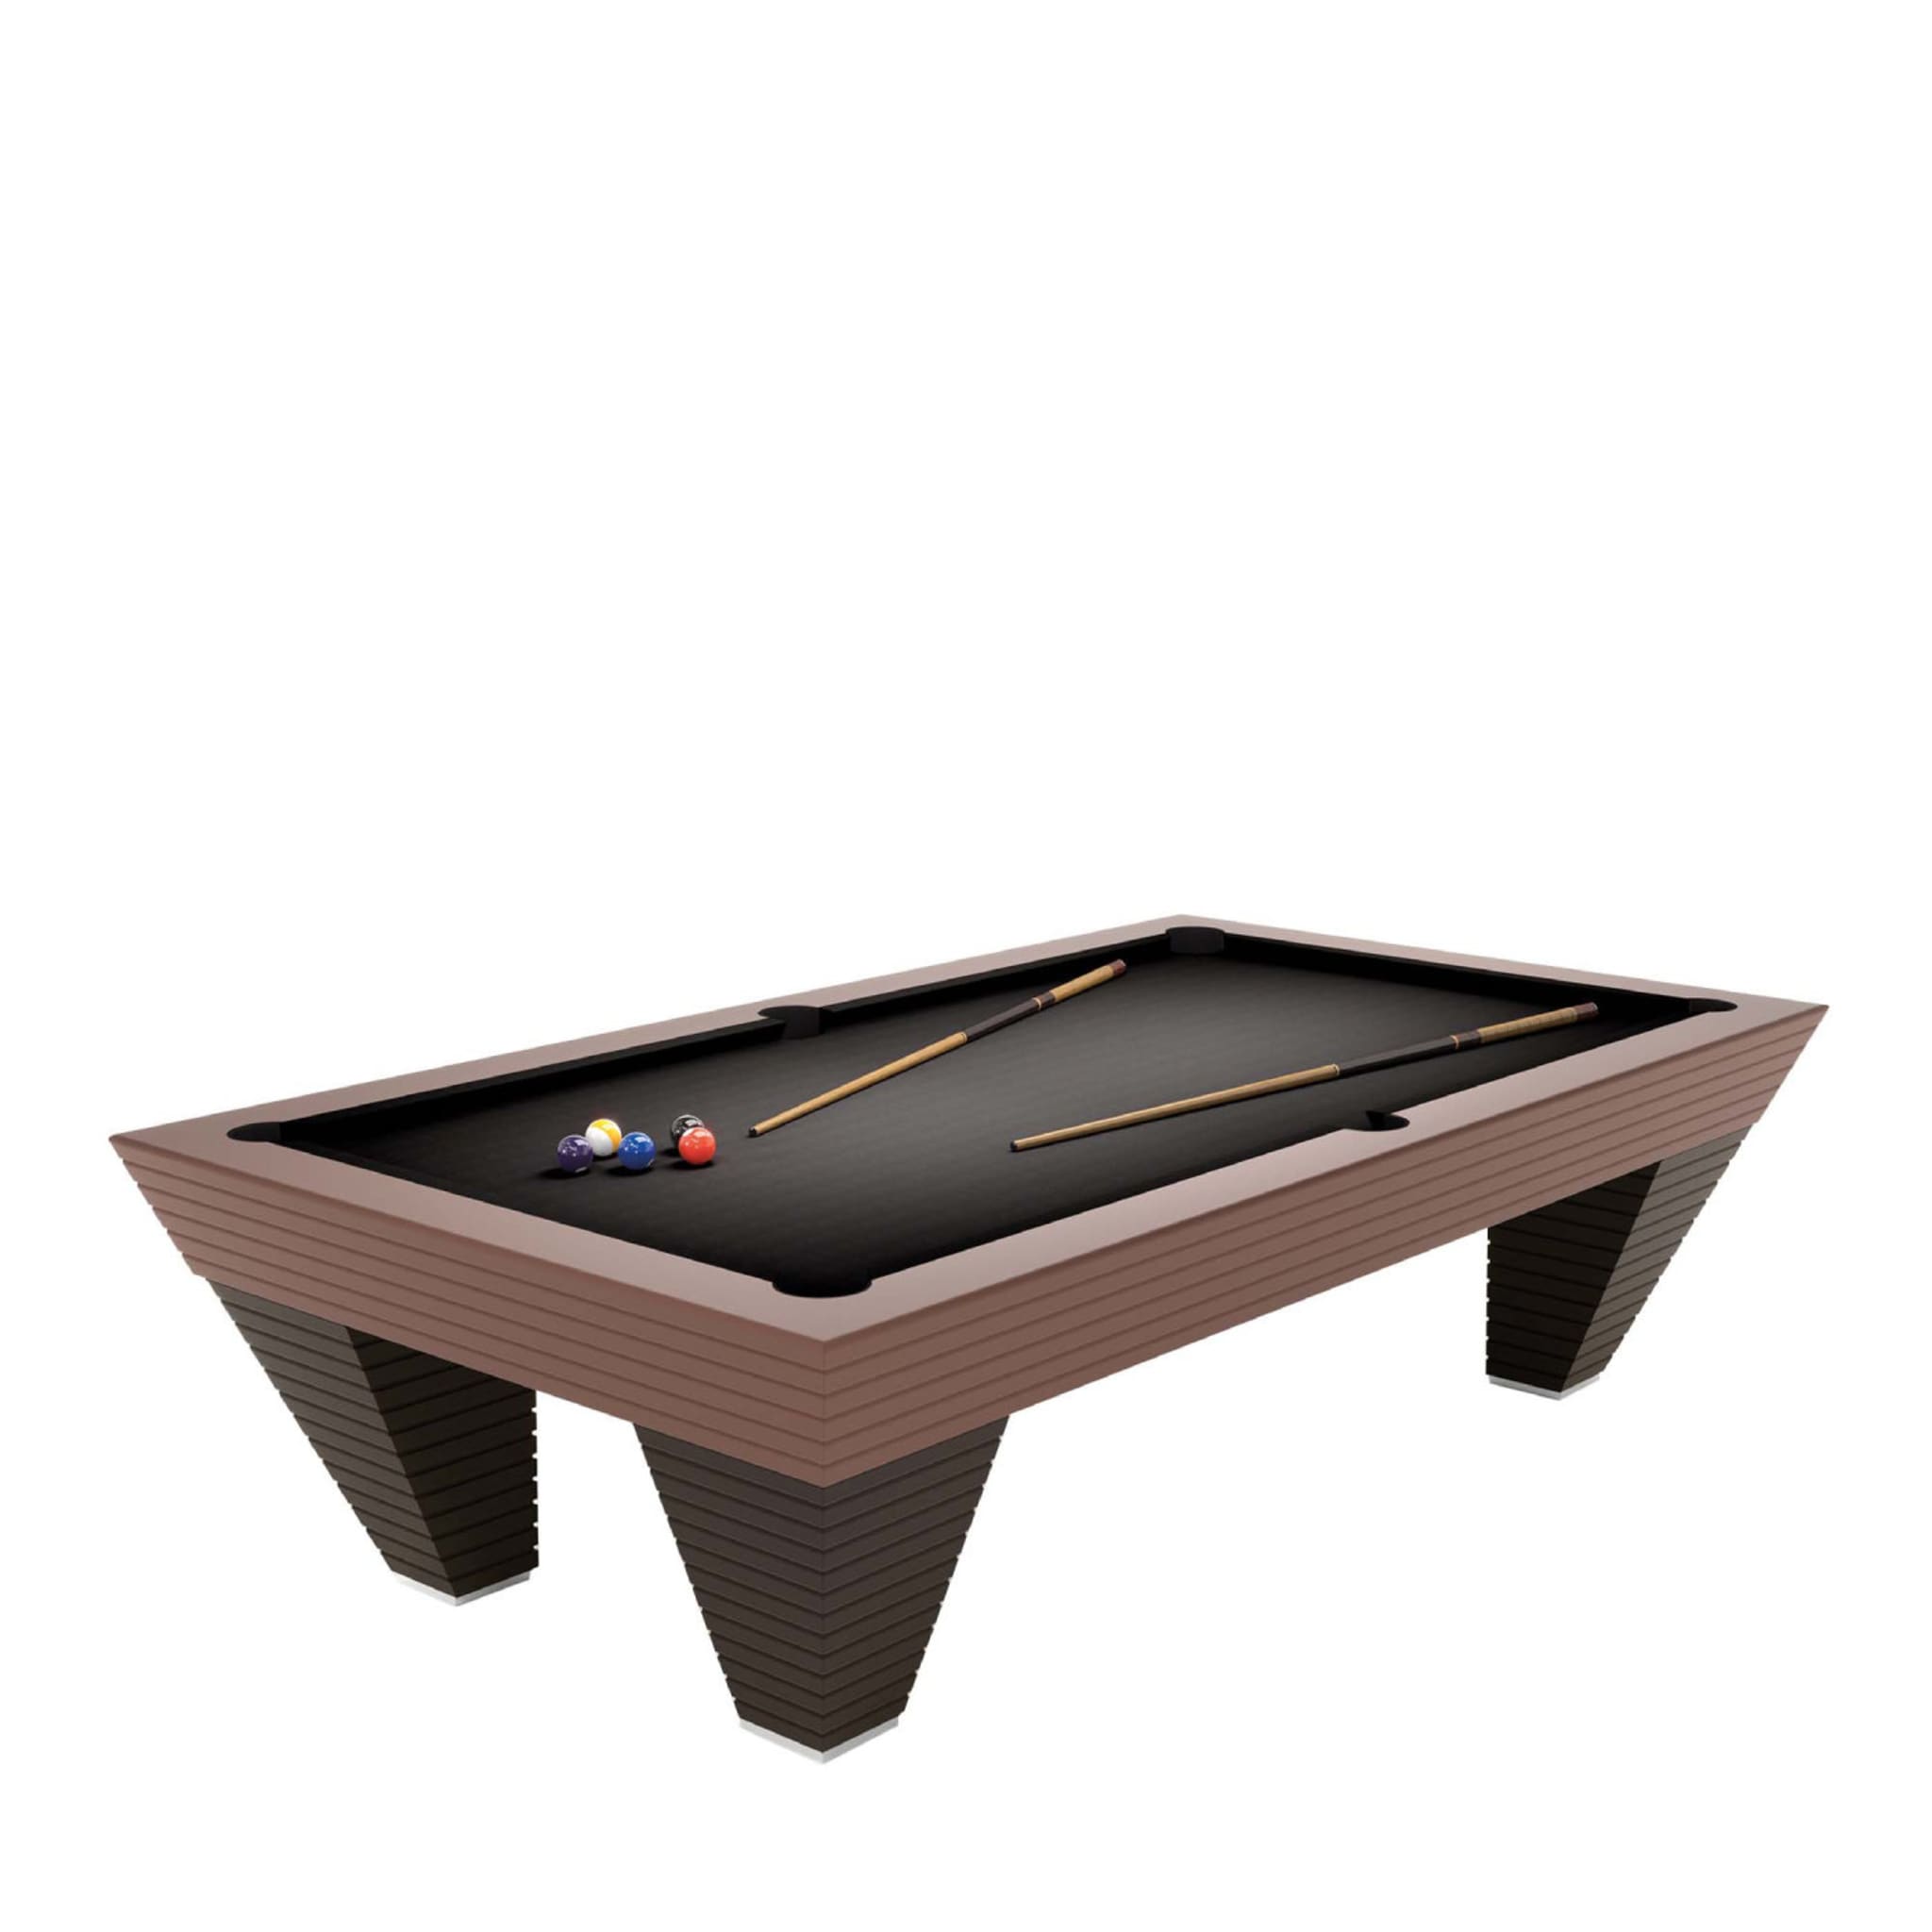 NewDe pool table by Pino Vismara - Main view